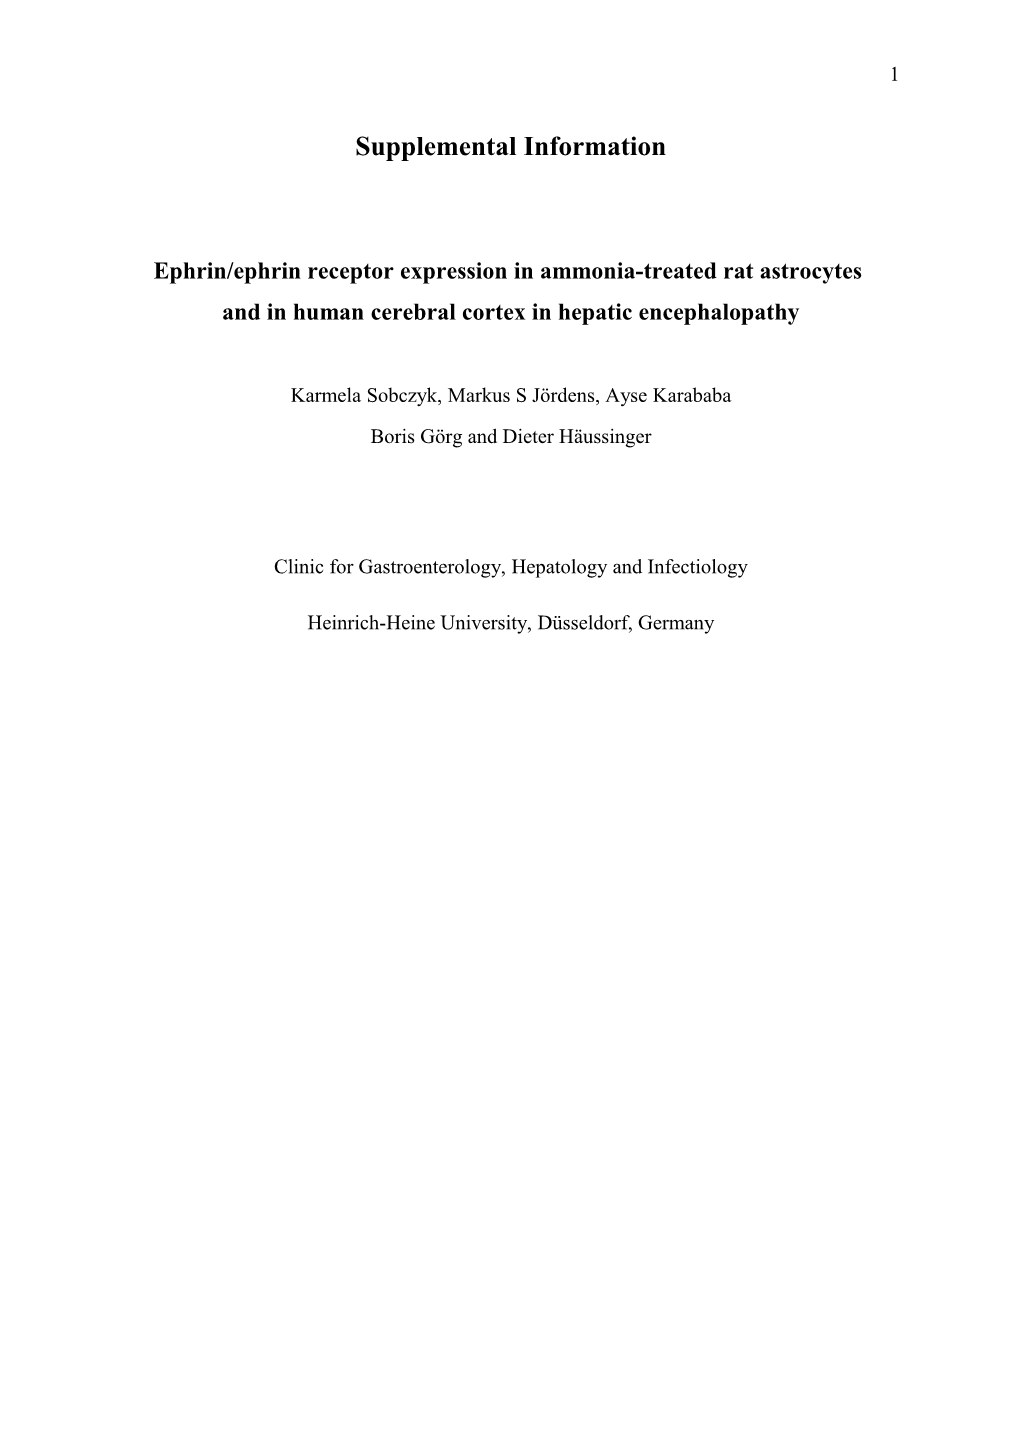 Ephrin/Ephrin Receptor Expression in Ammonia-Treated Rat Astrocytes